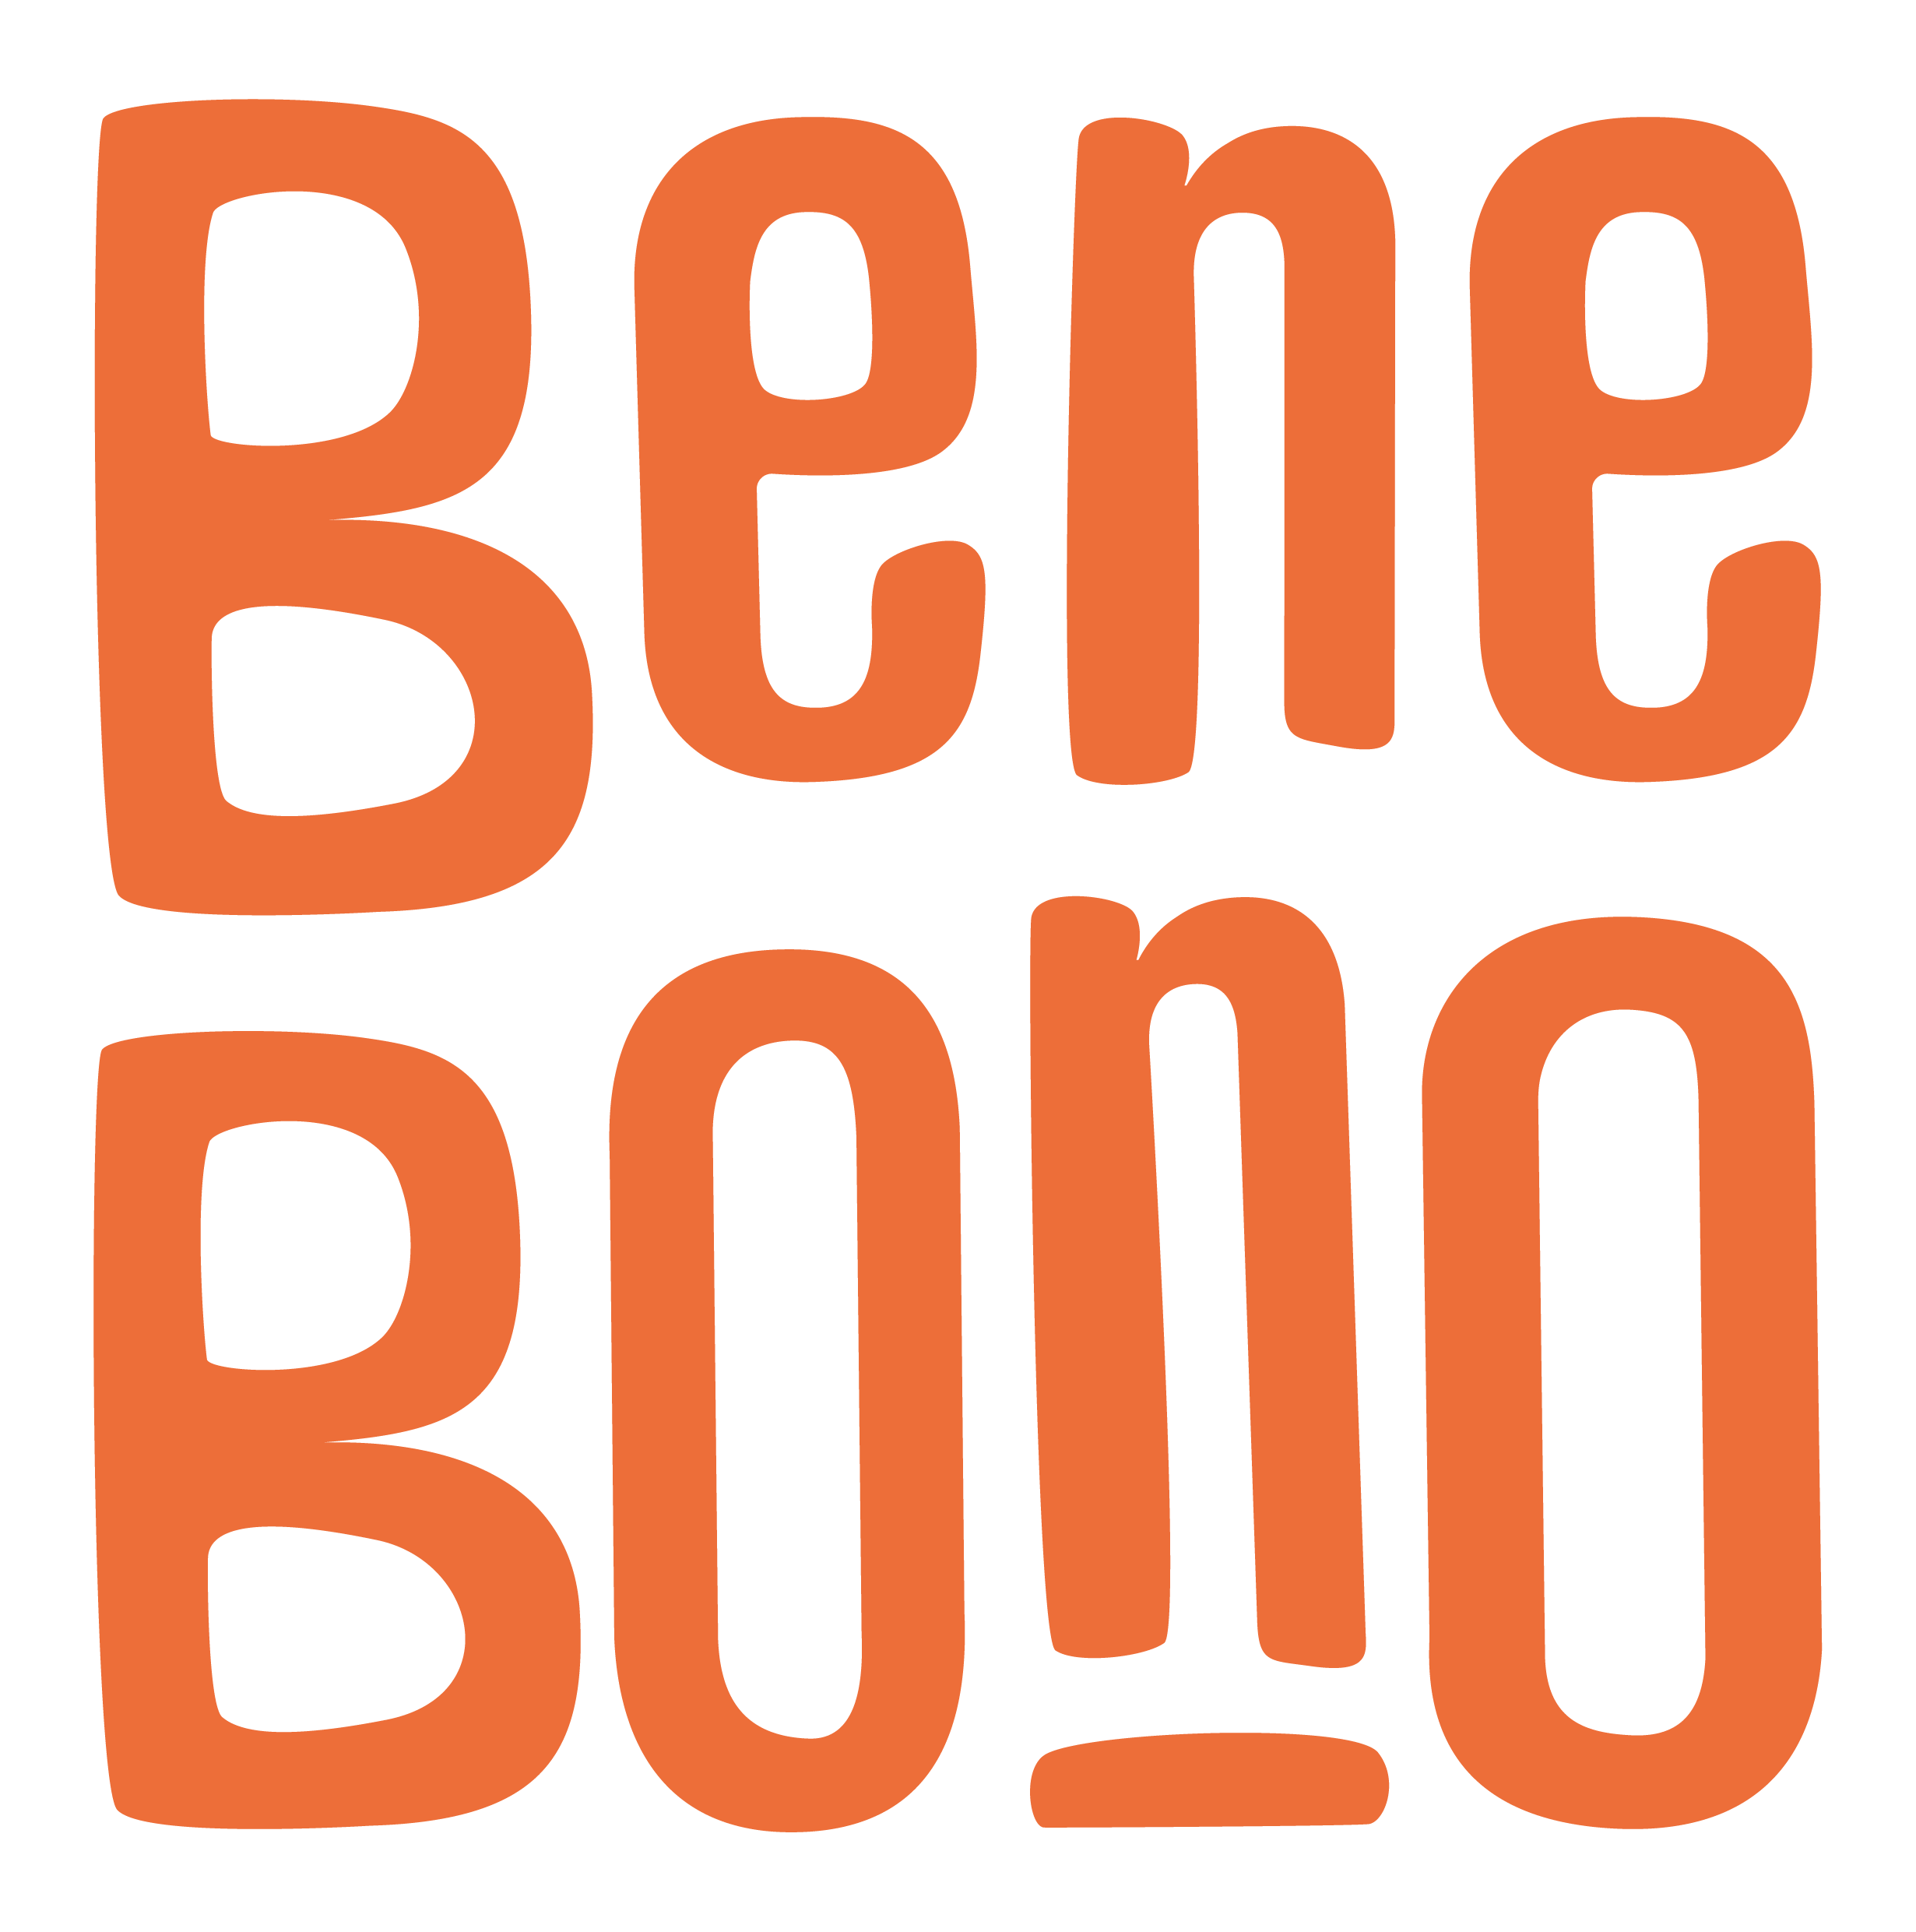 BeneBono